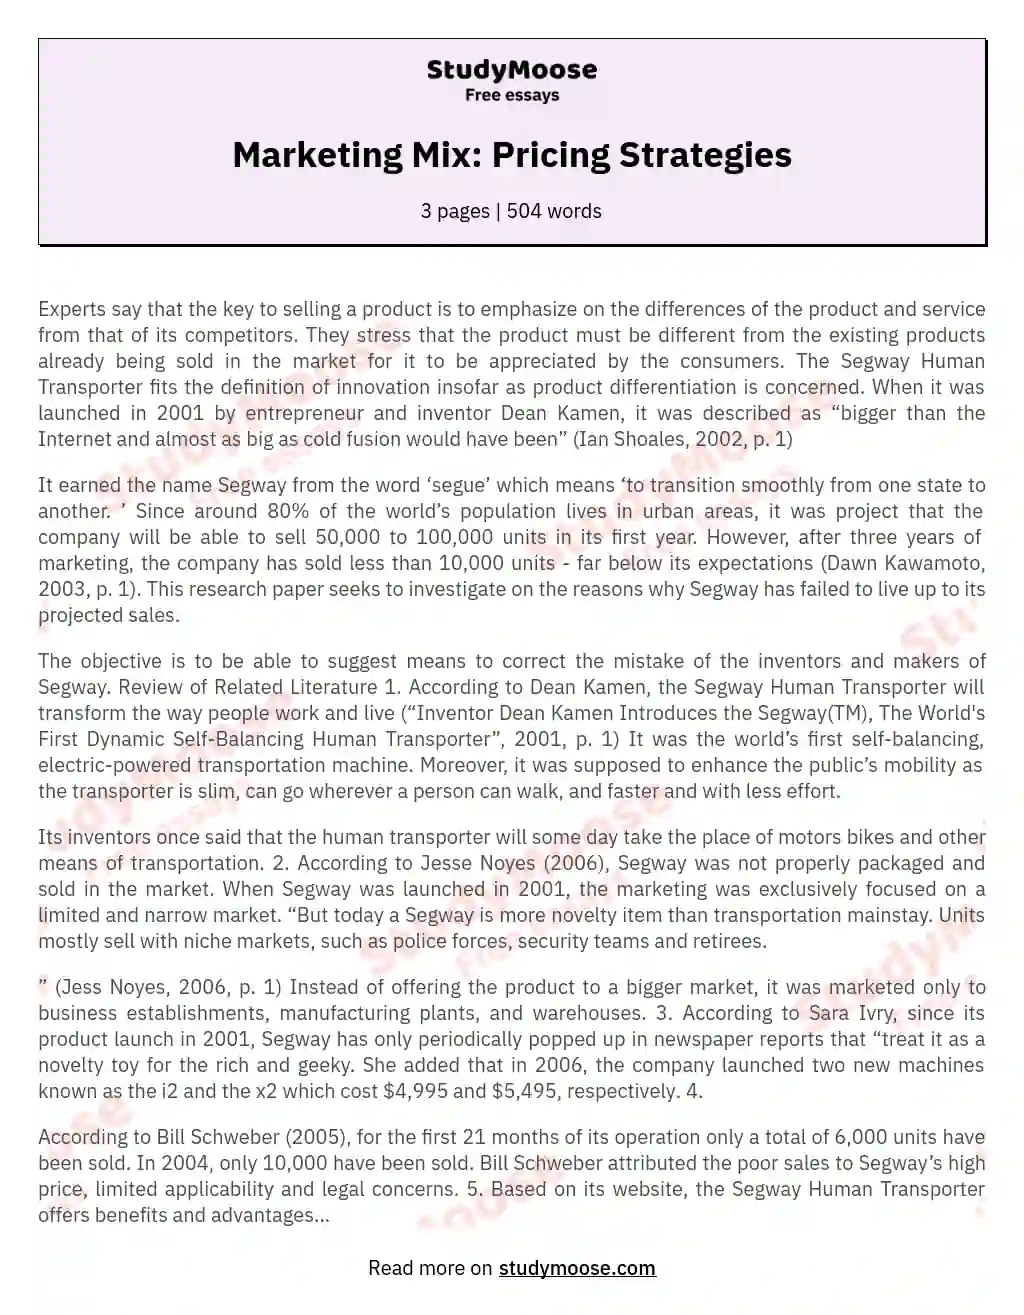 Marketing Mix: Pricing Strategies essay